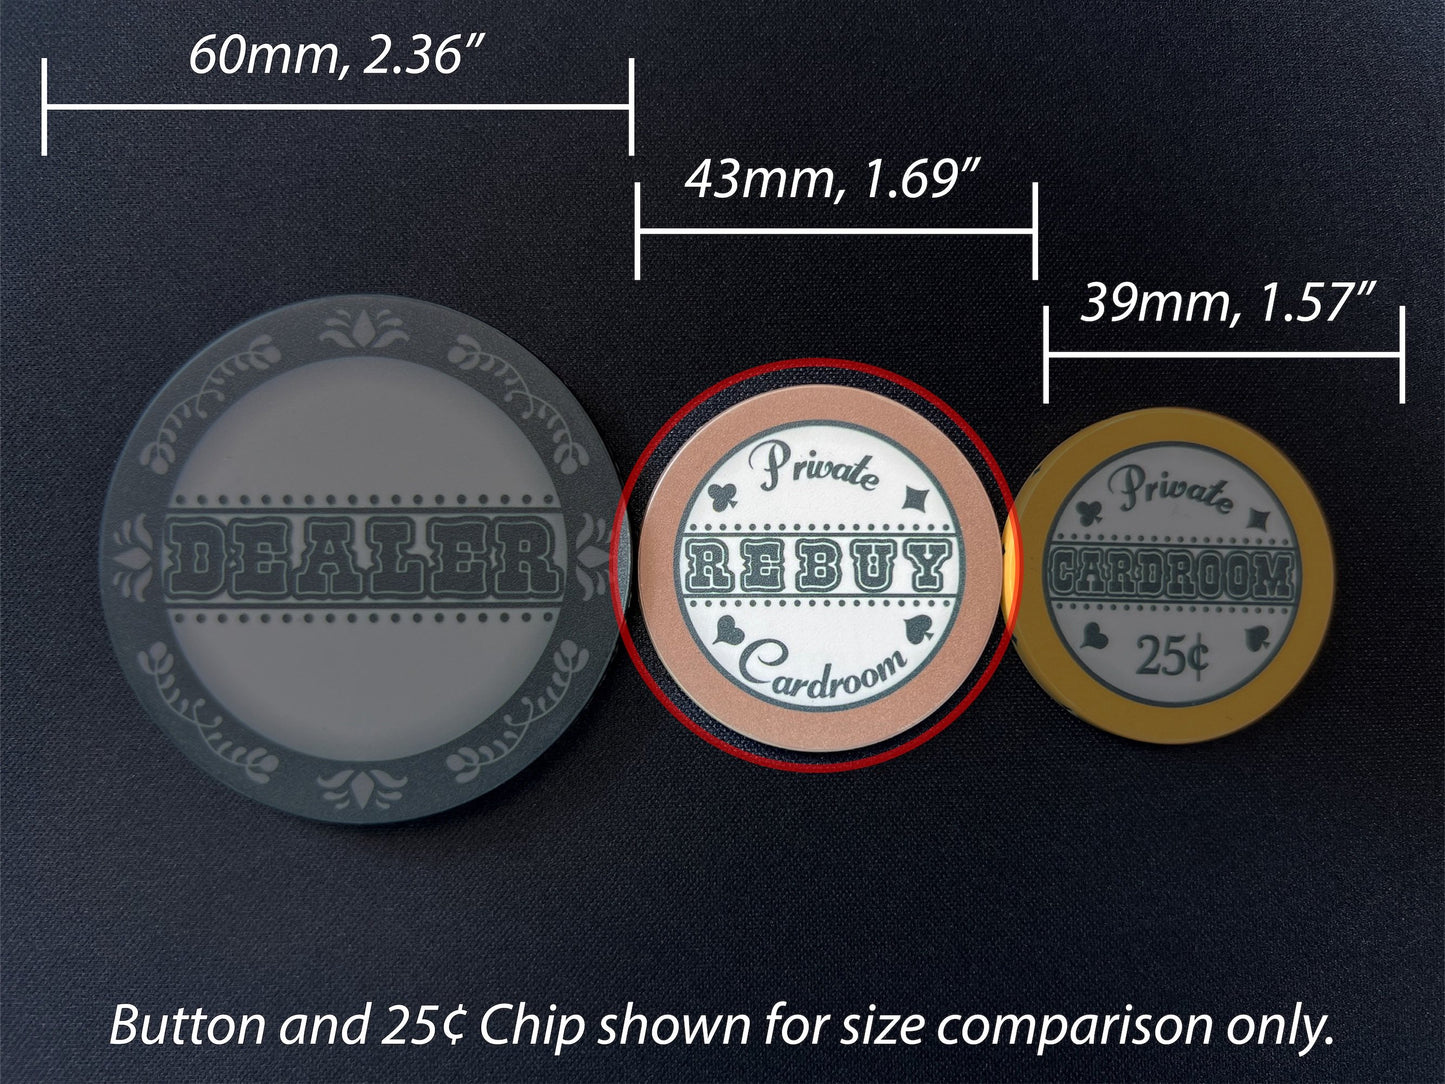 Private Cardroom Rebuy Chips [43mm]